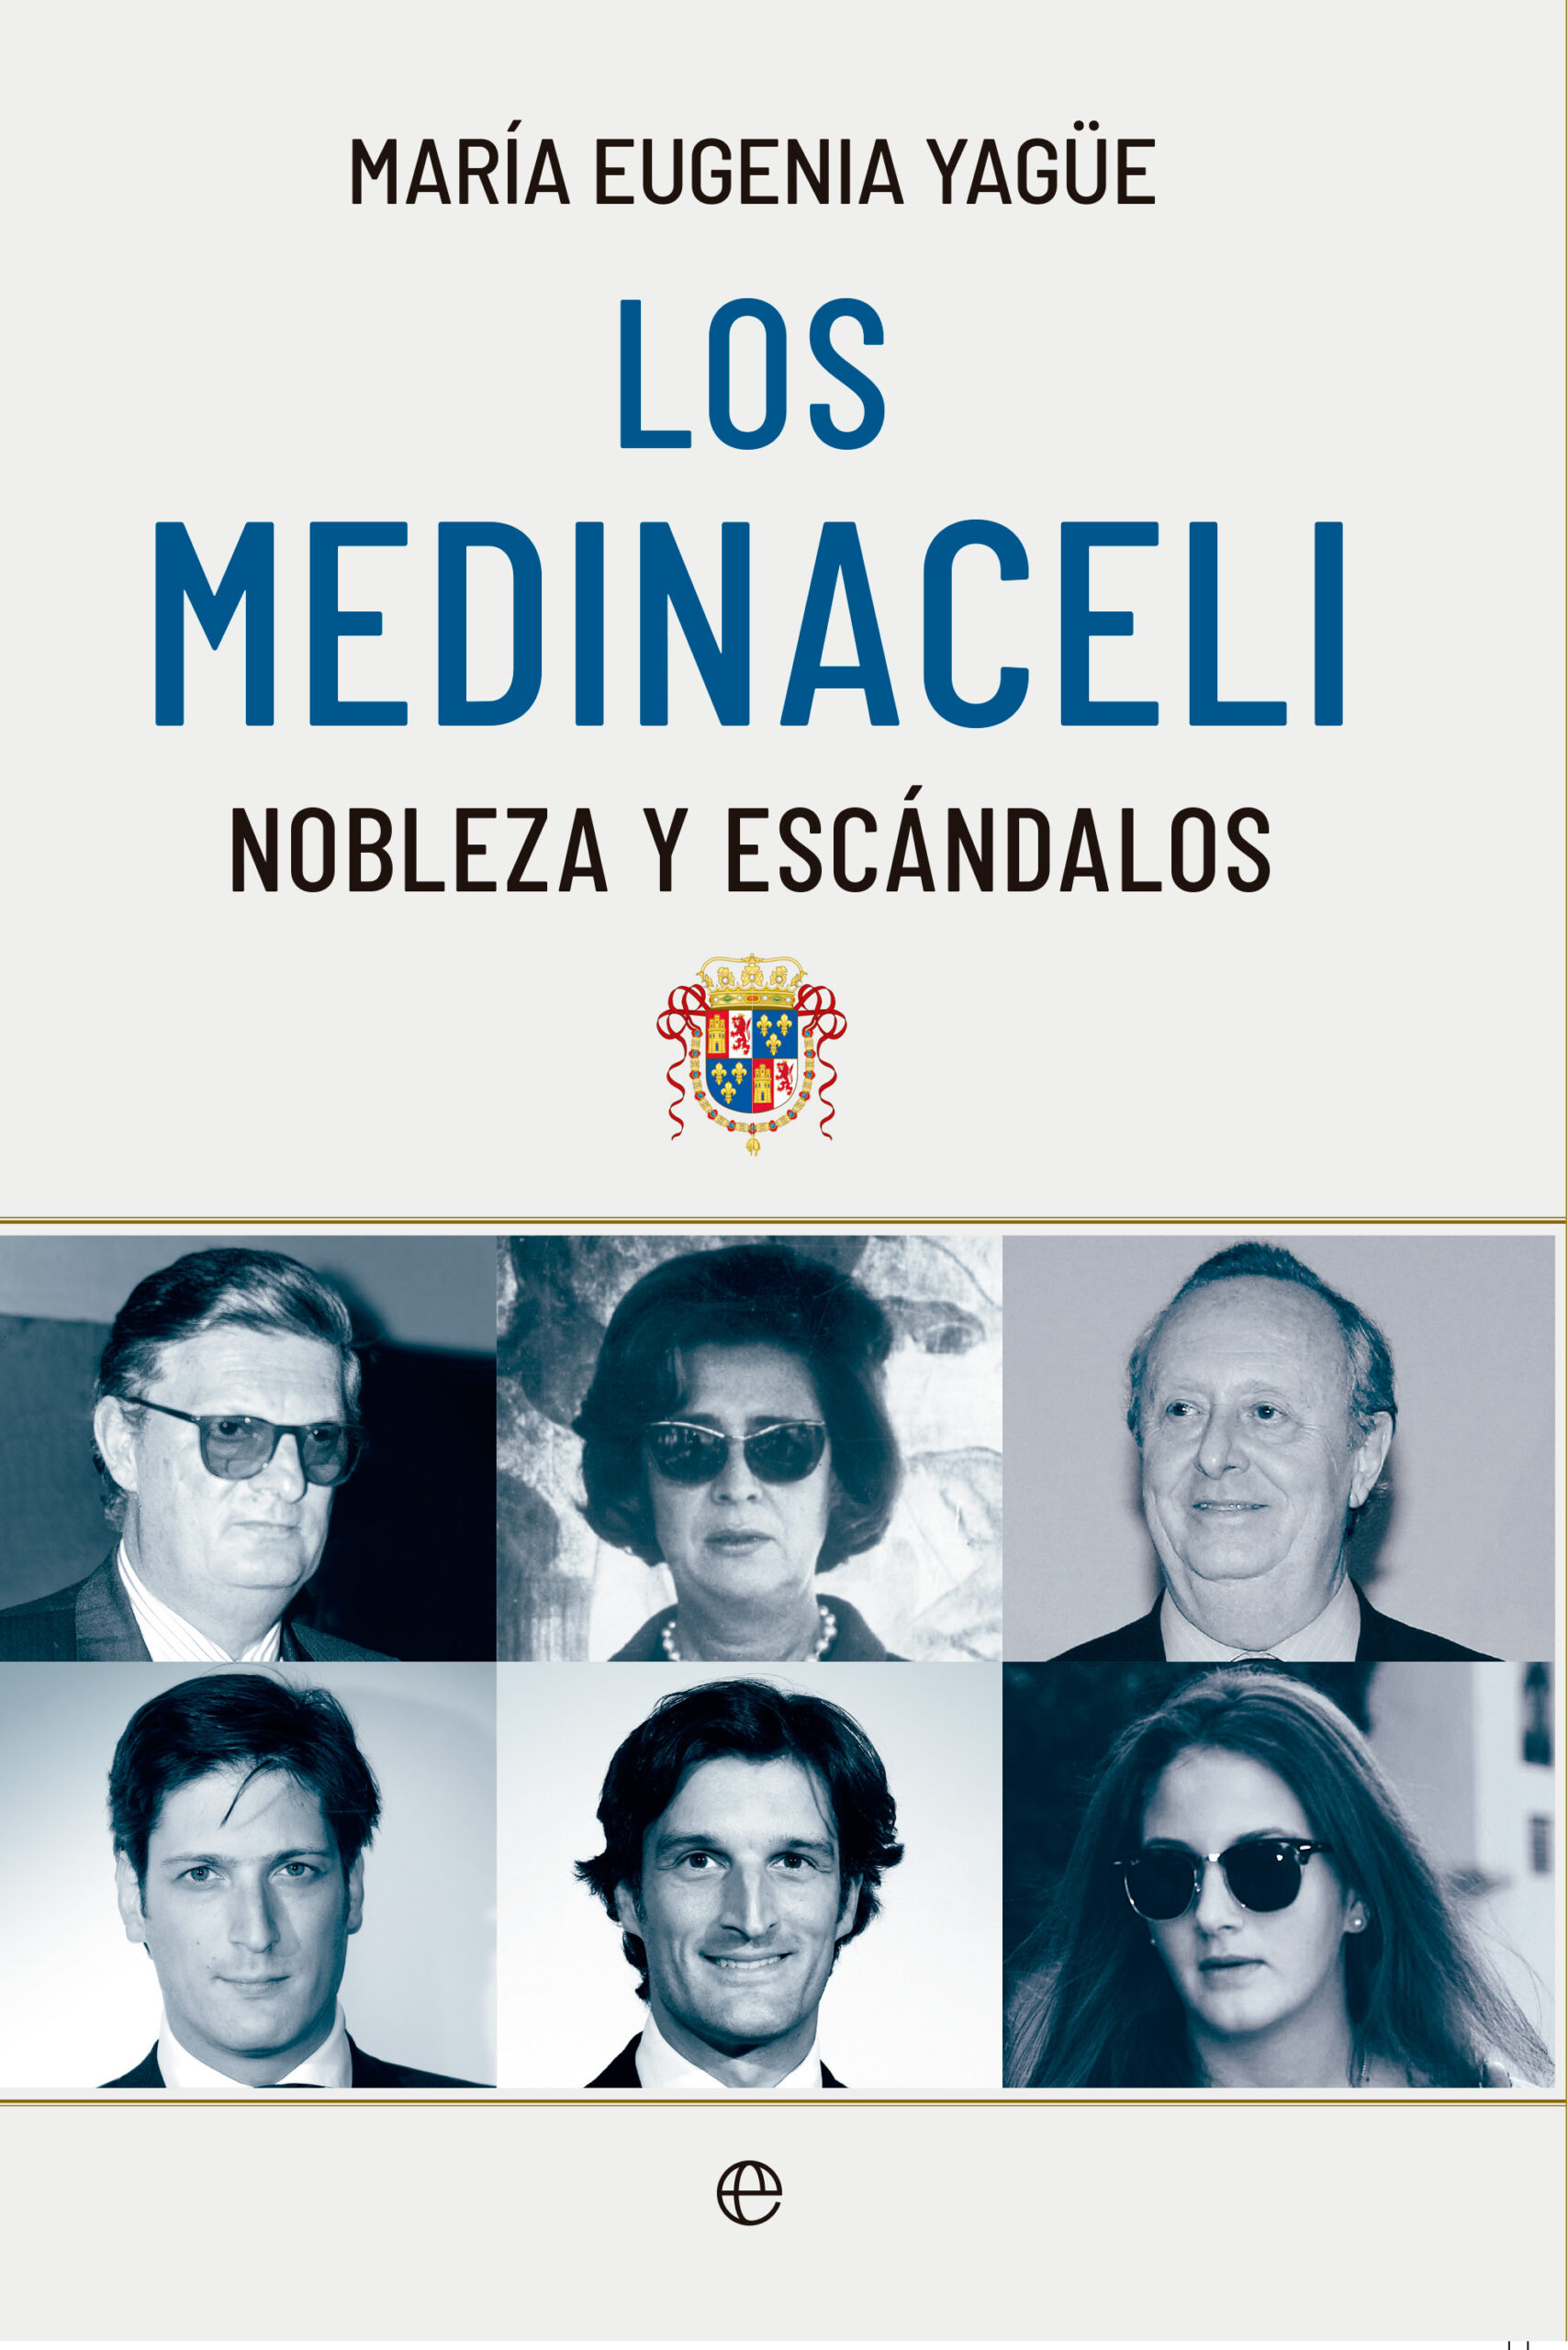 Los Medinaceli